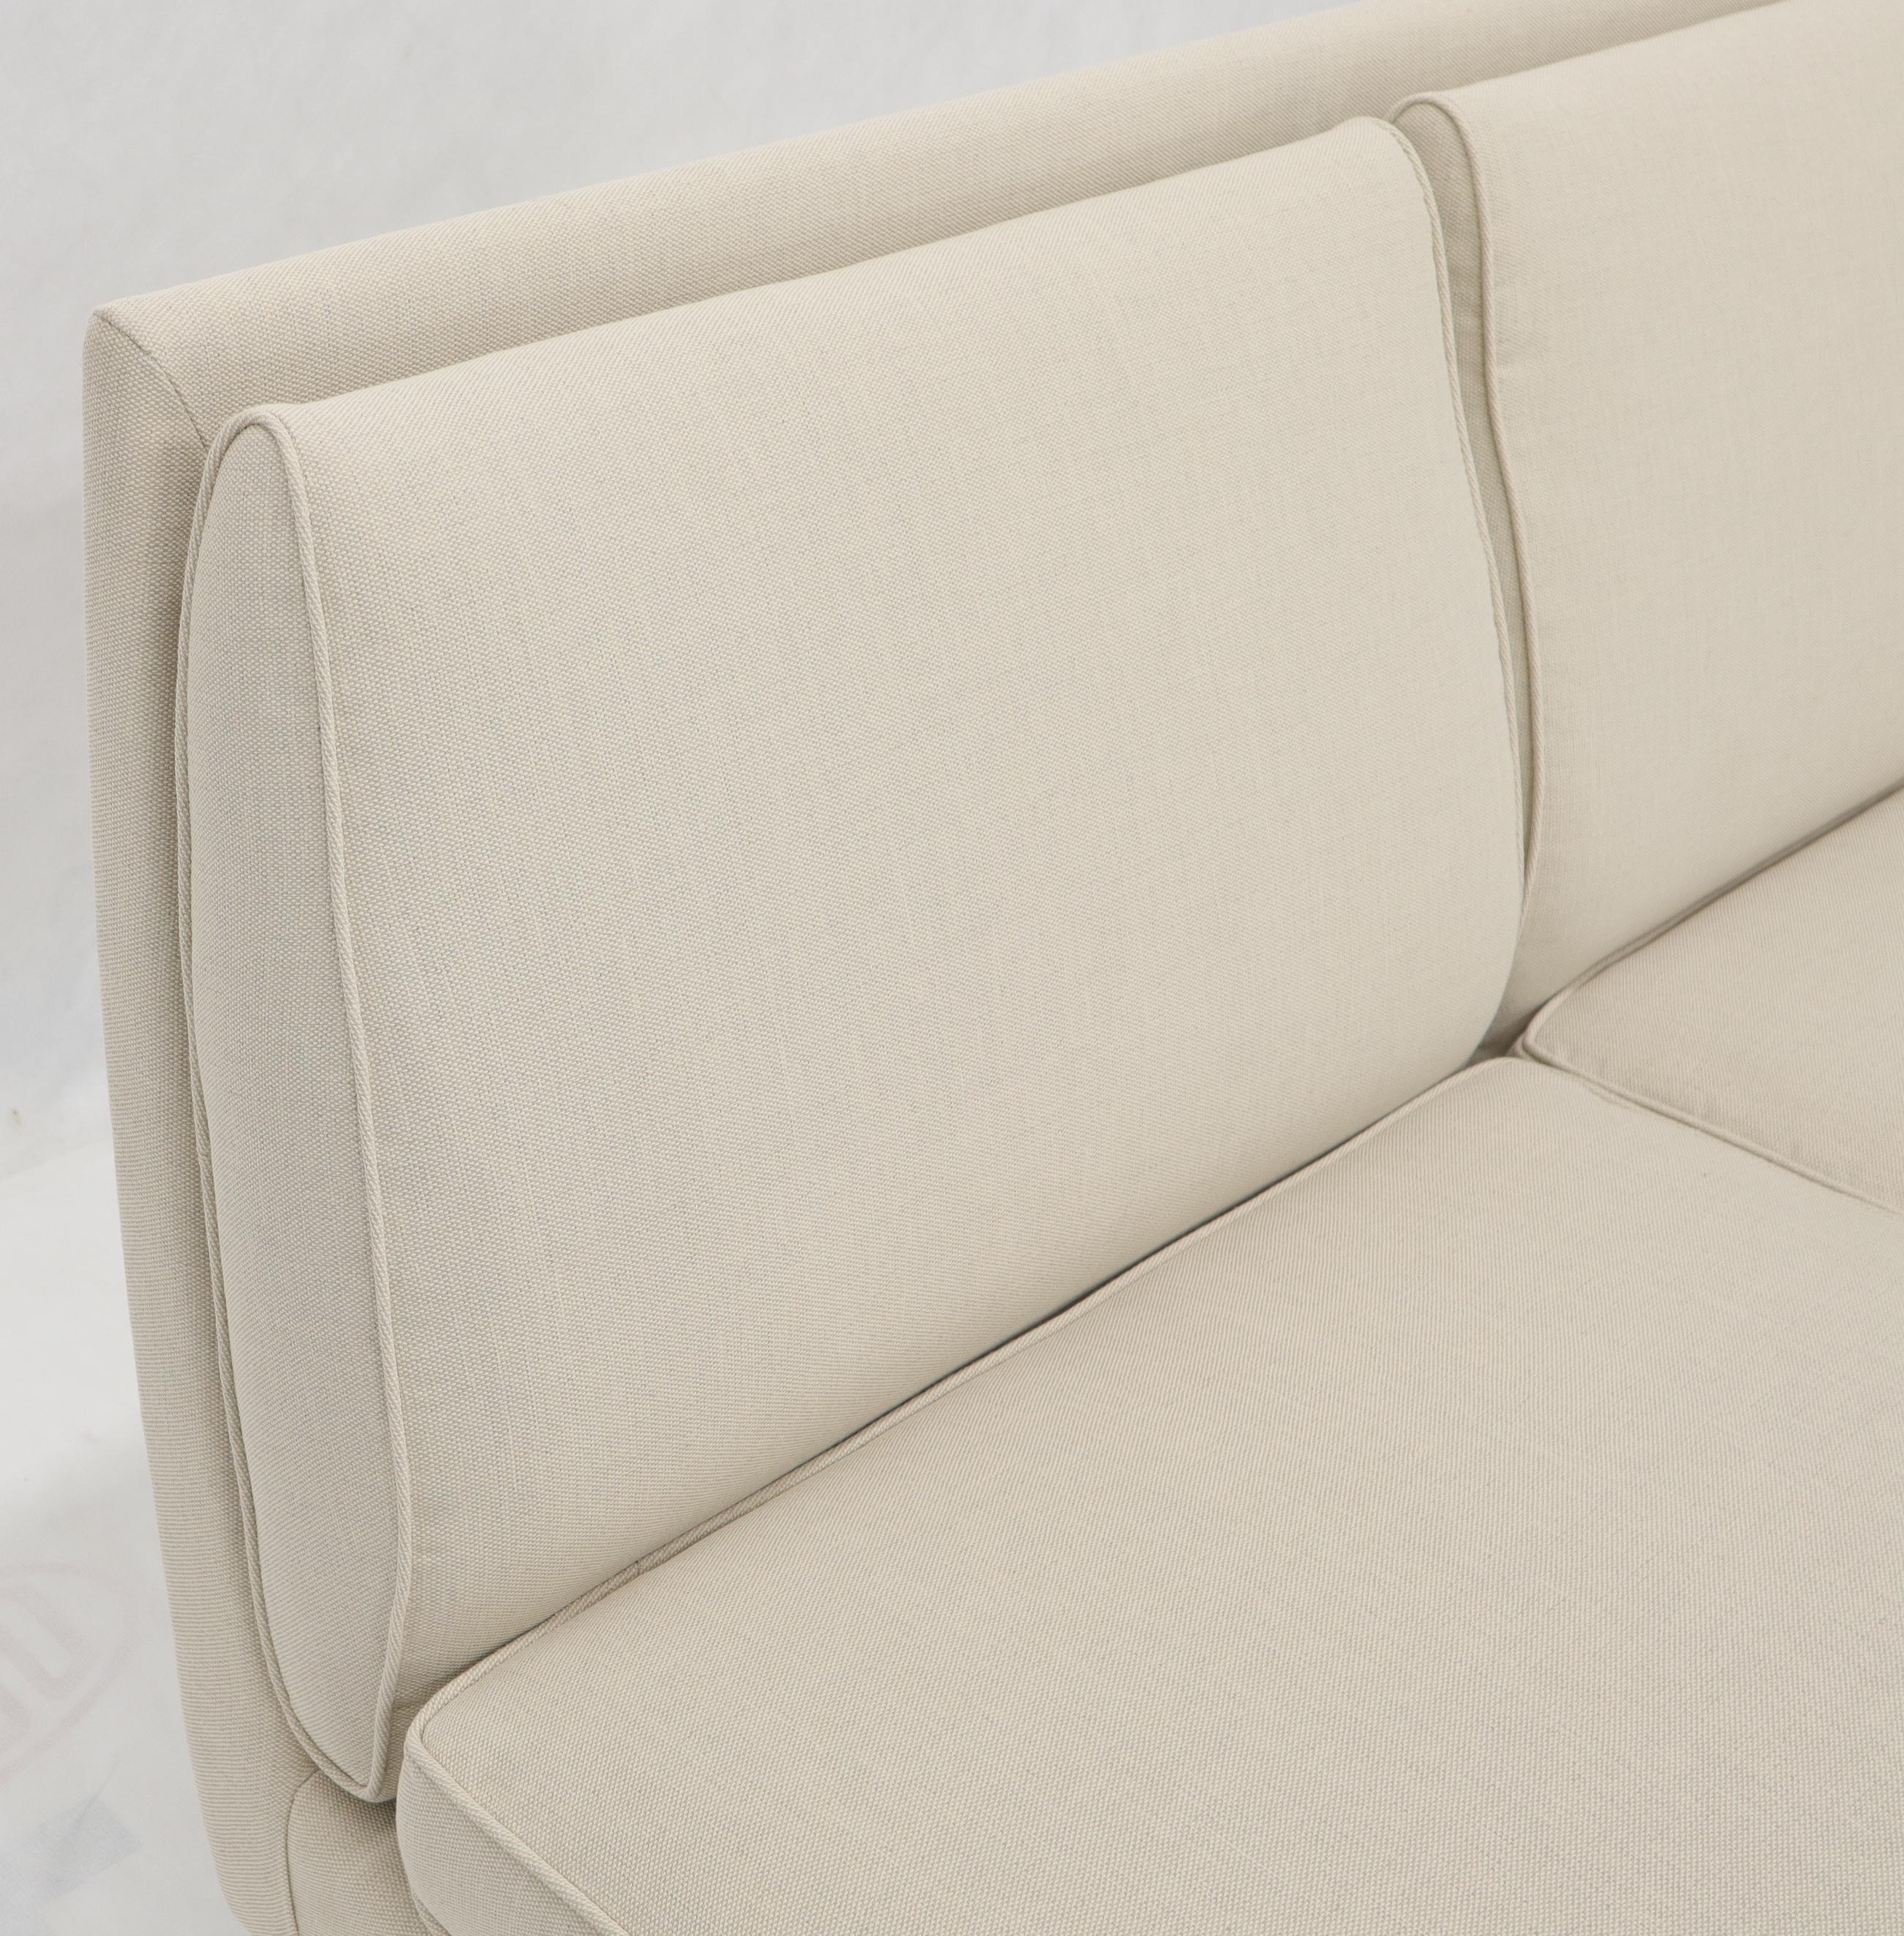 Jens Risom New Canval like Upholstery Loveseat Sofa by Jens Risom 2